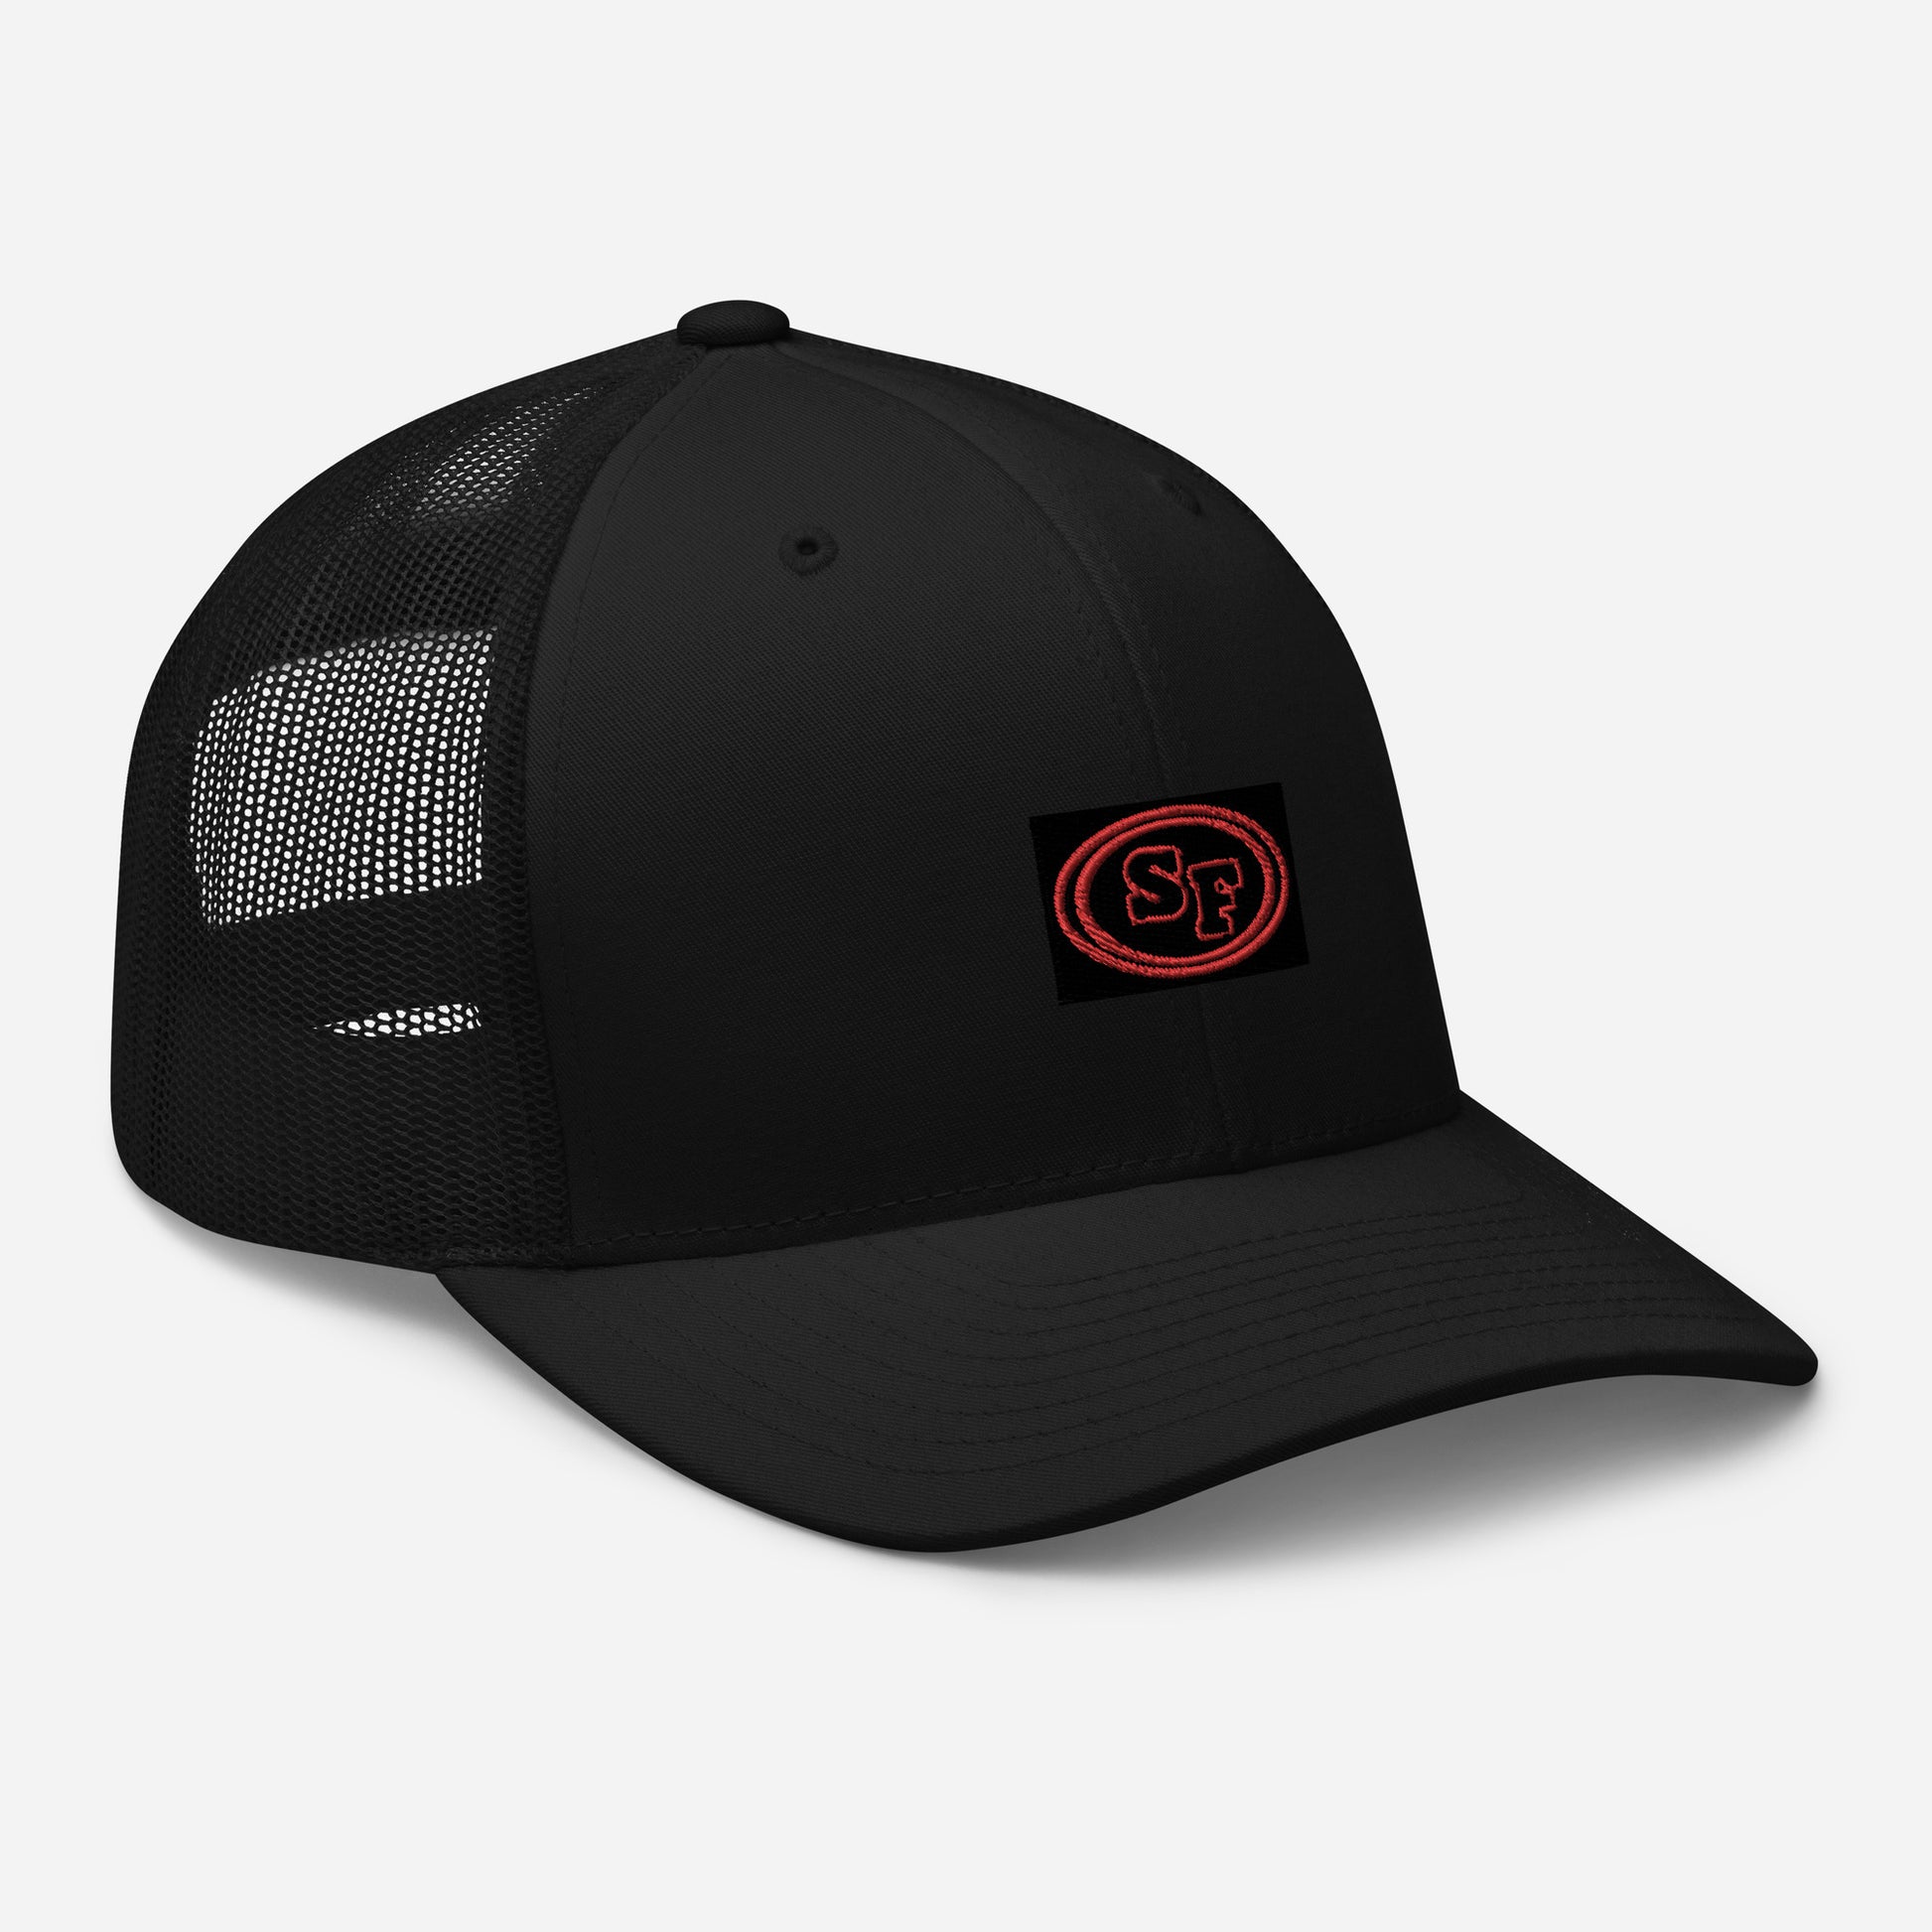 San Francisco Hat / 49ers hat / Kyle Shanahan Trucker Cap